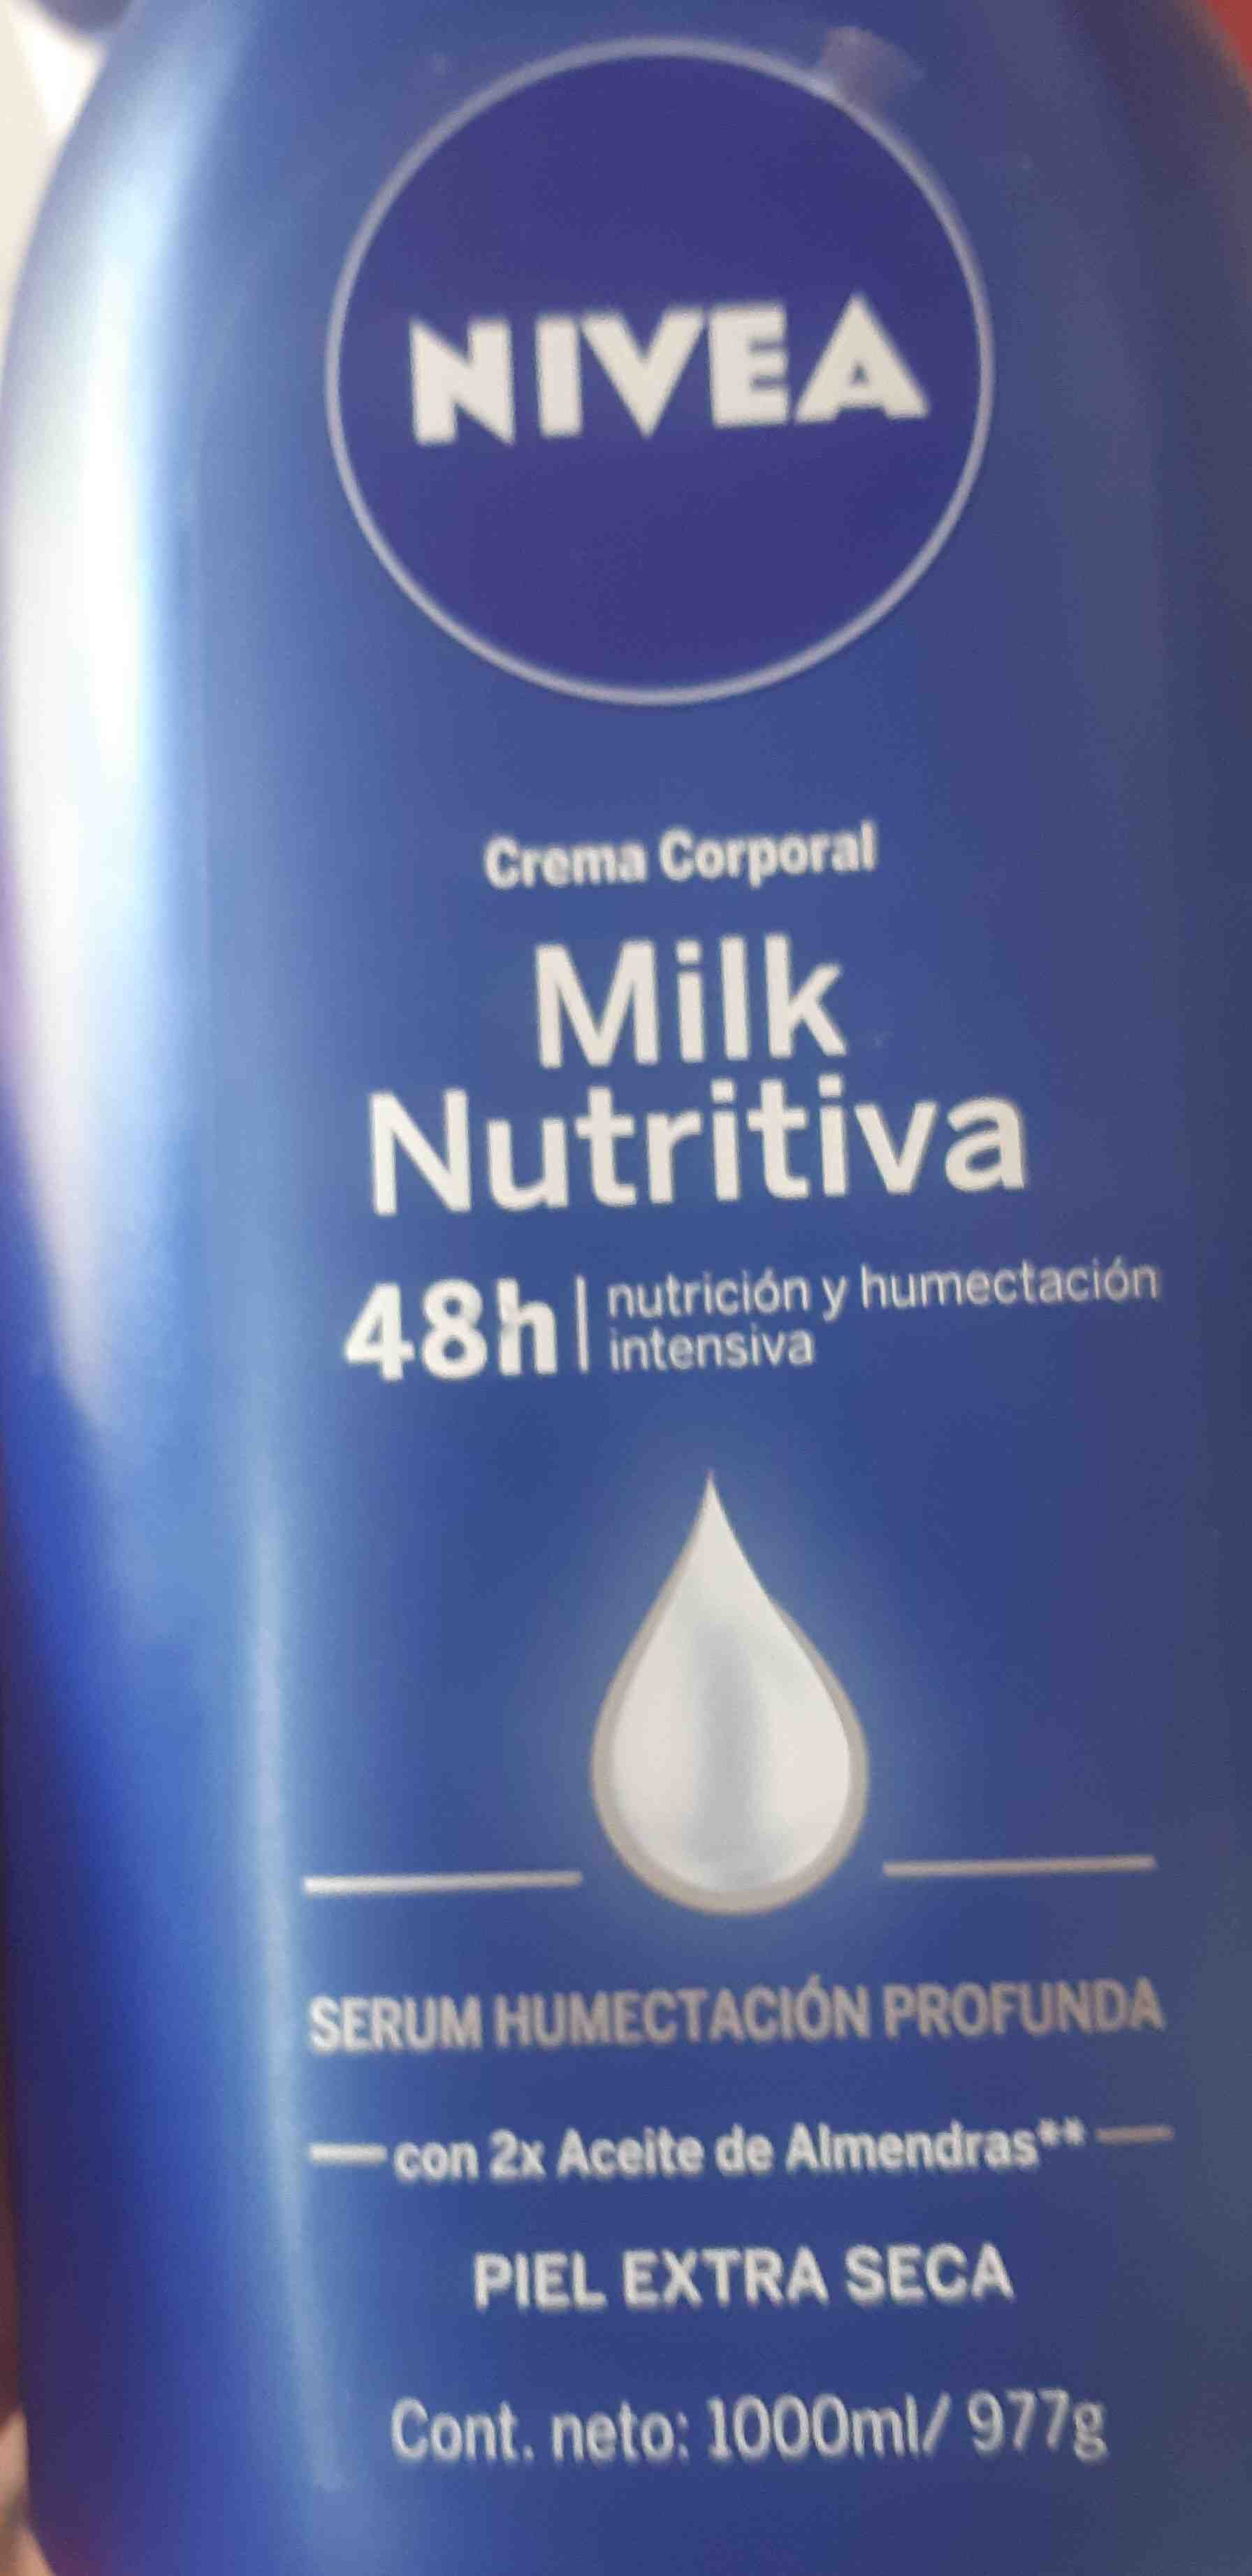 Milk nutritiva - Product - en